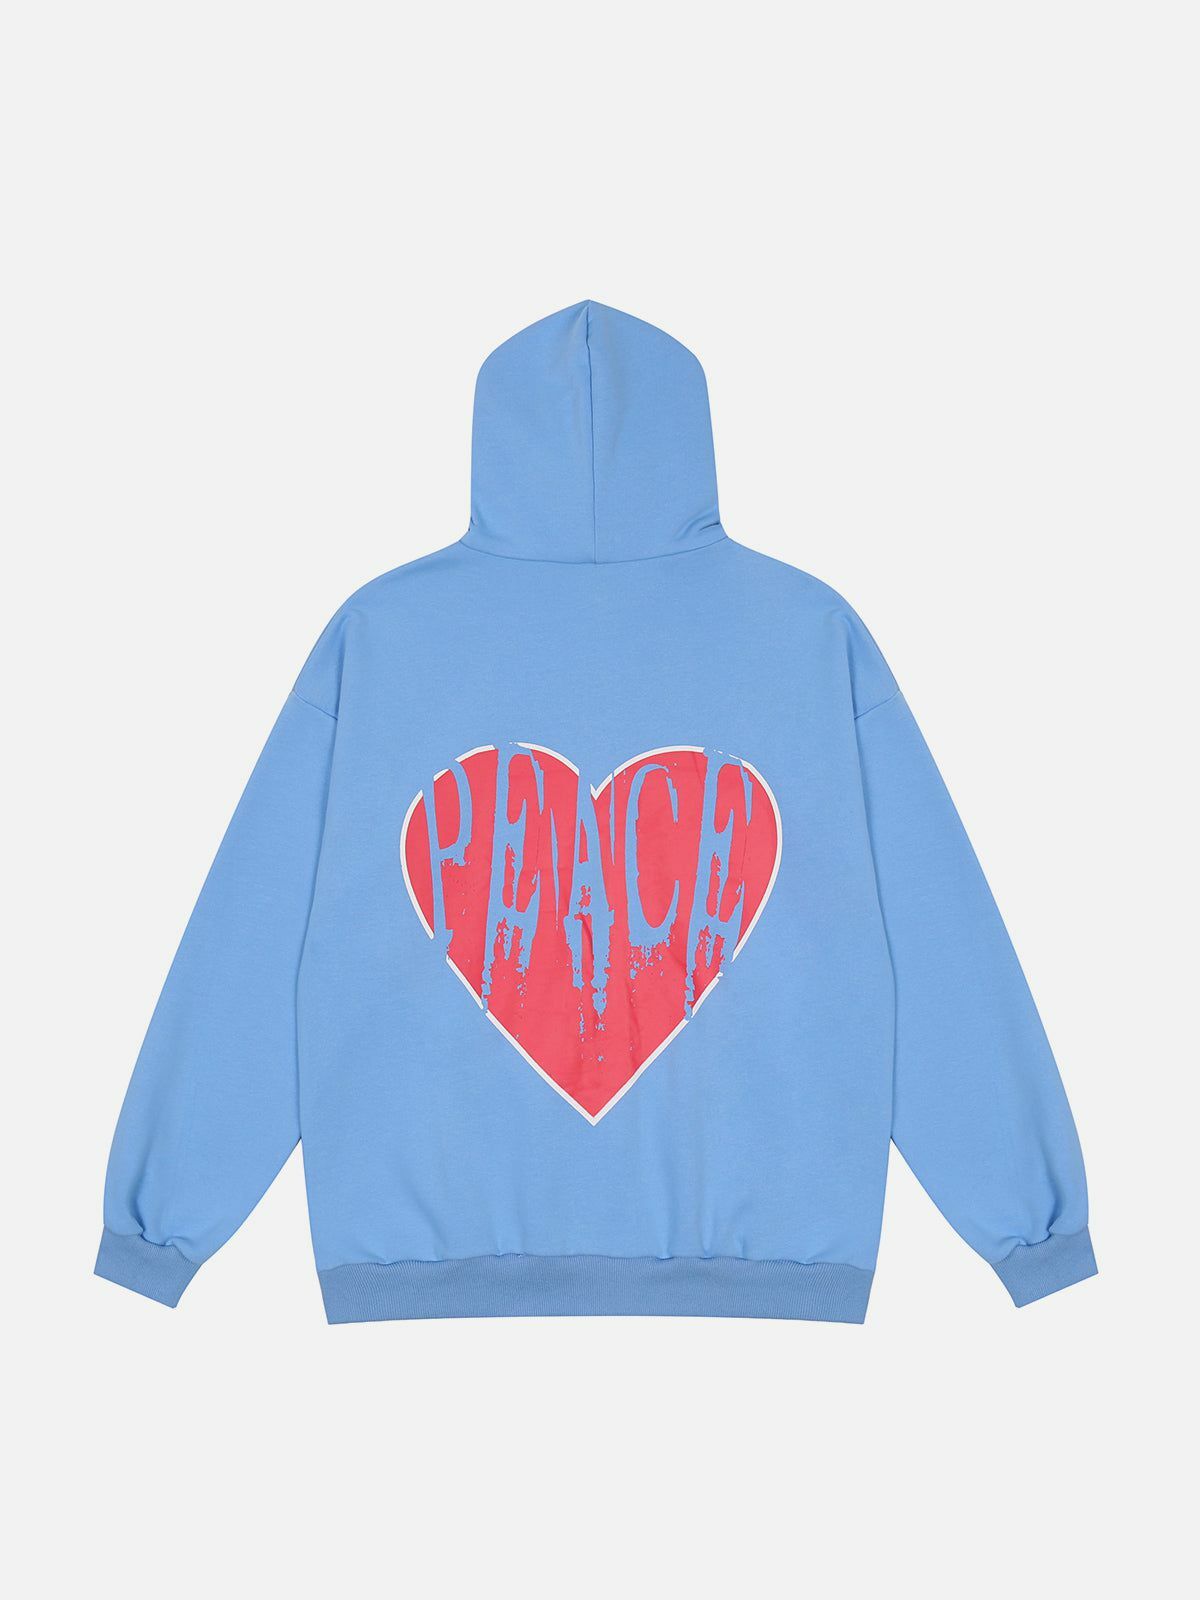 peace & love cardigan hoodie retro vibes & cozy style 2784